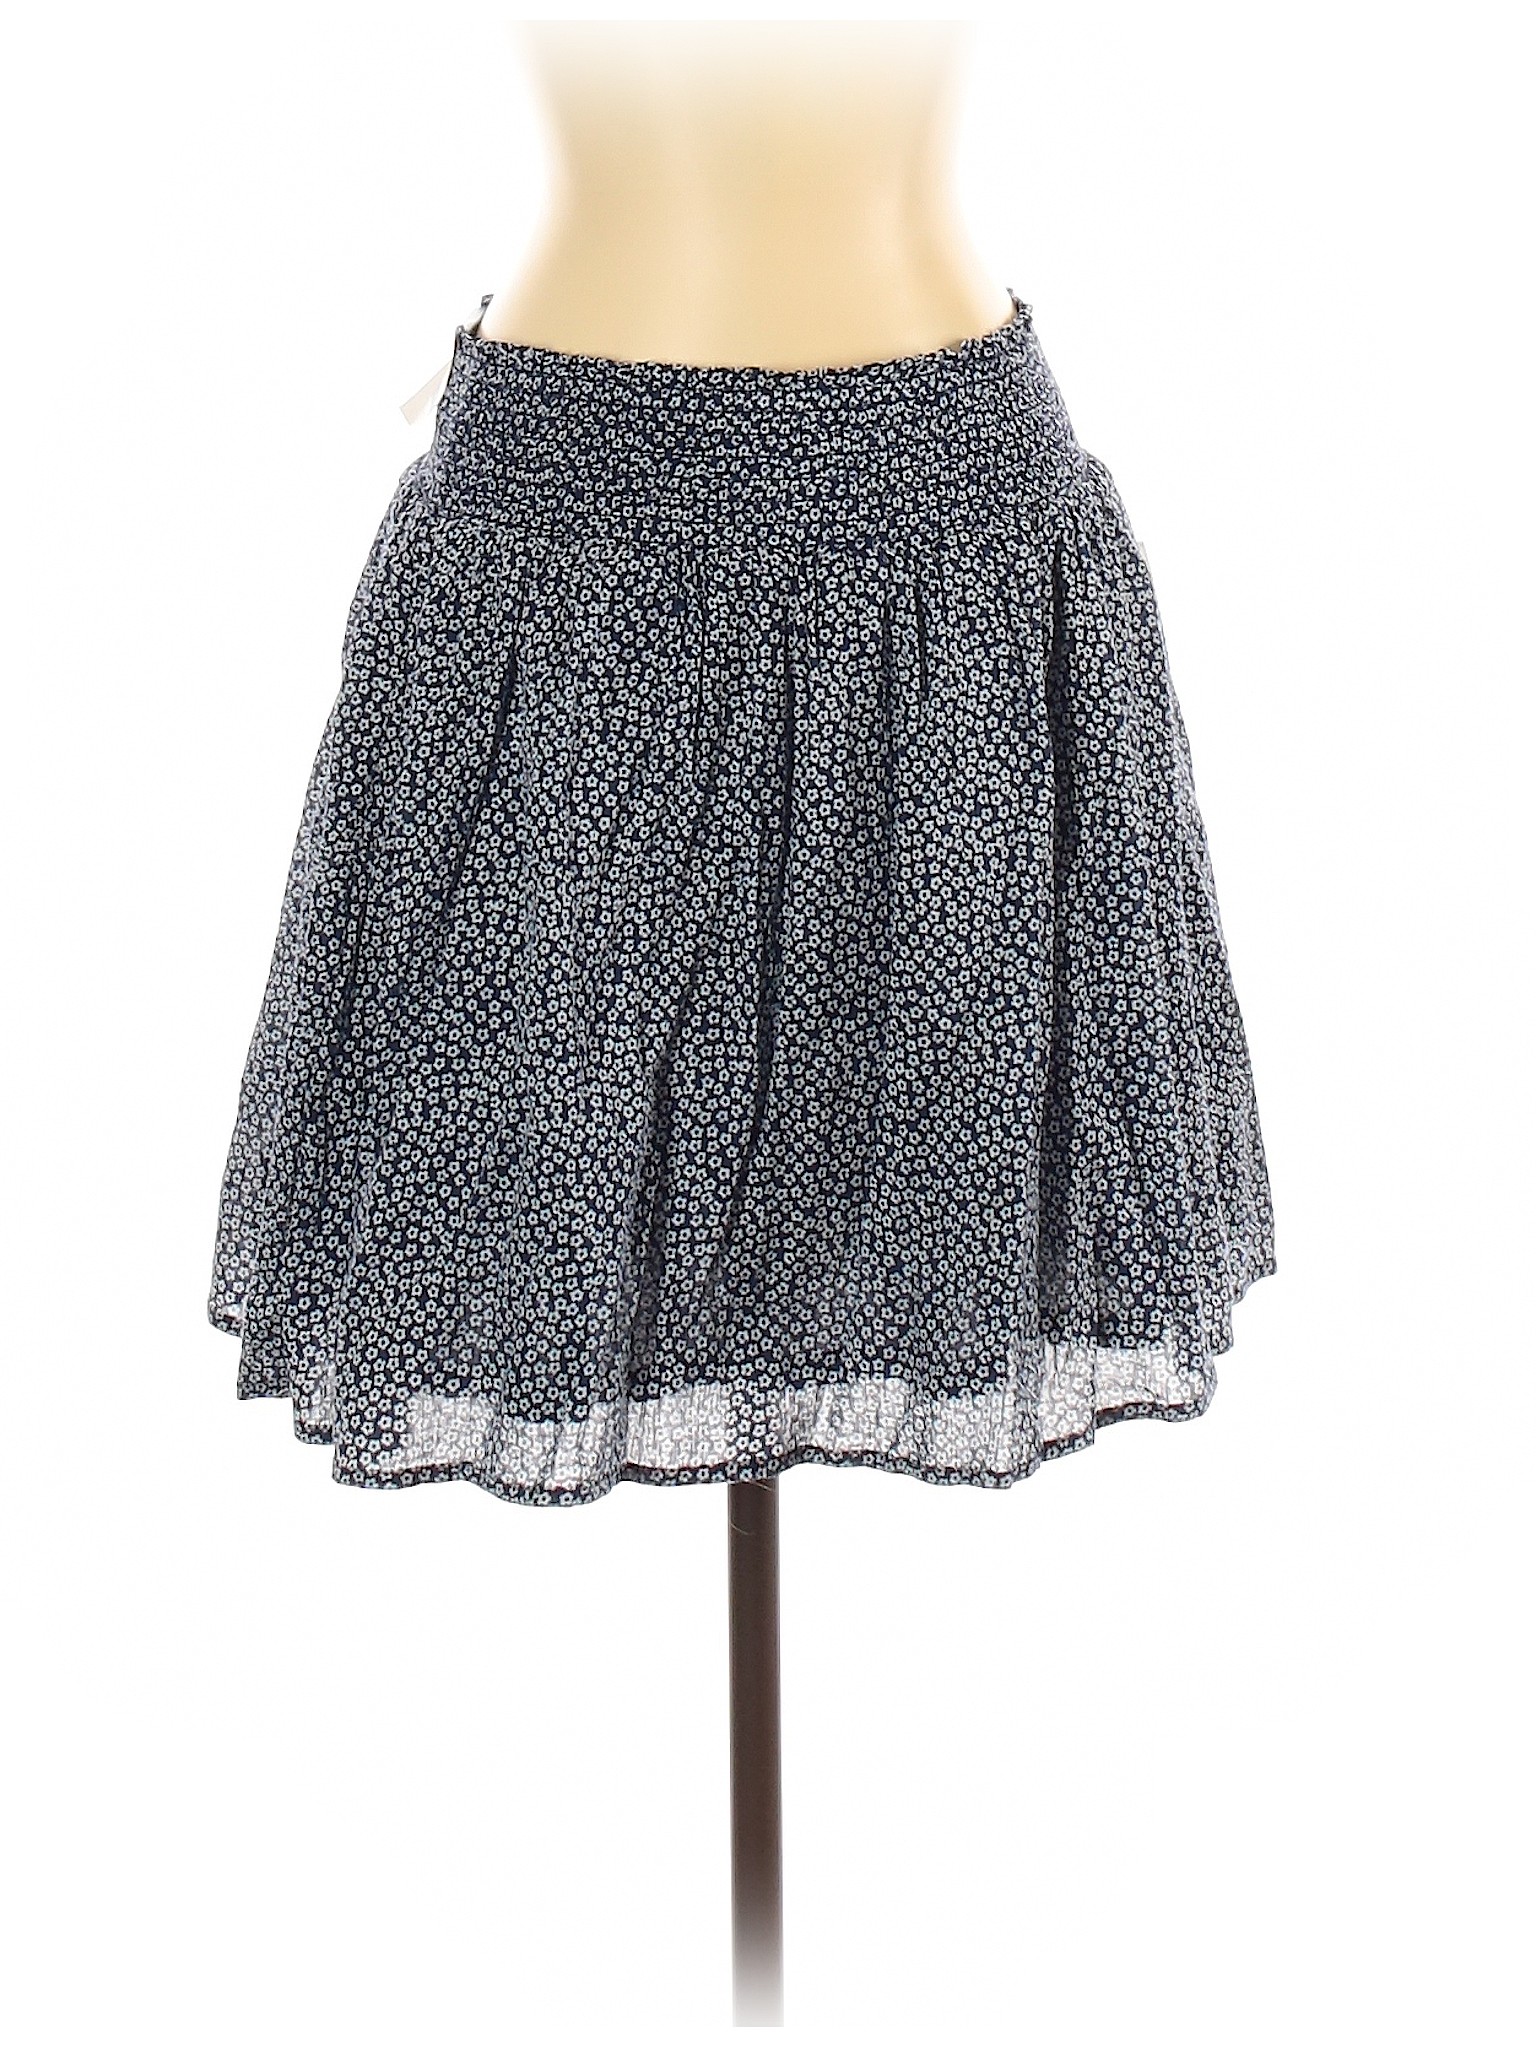 NWT Old Navy Women Blue Casual Skirt S Petites | eBay